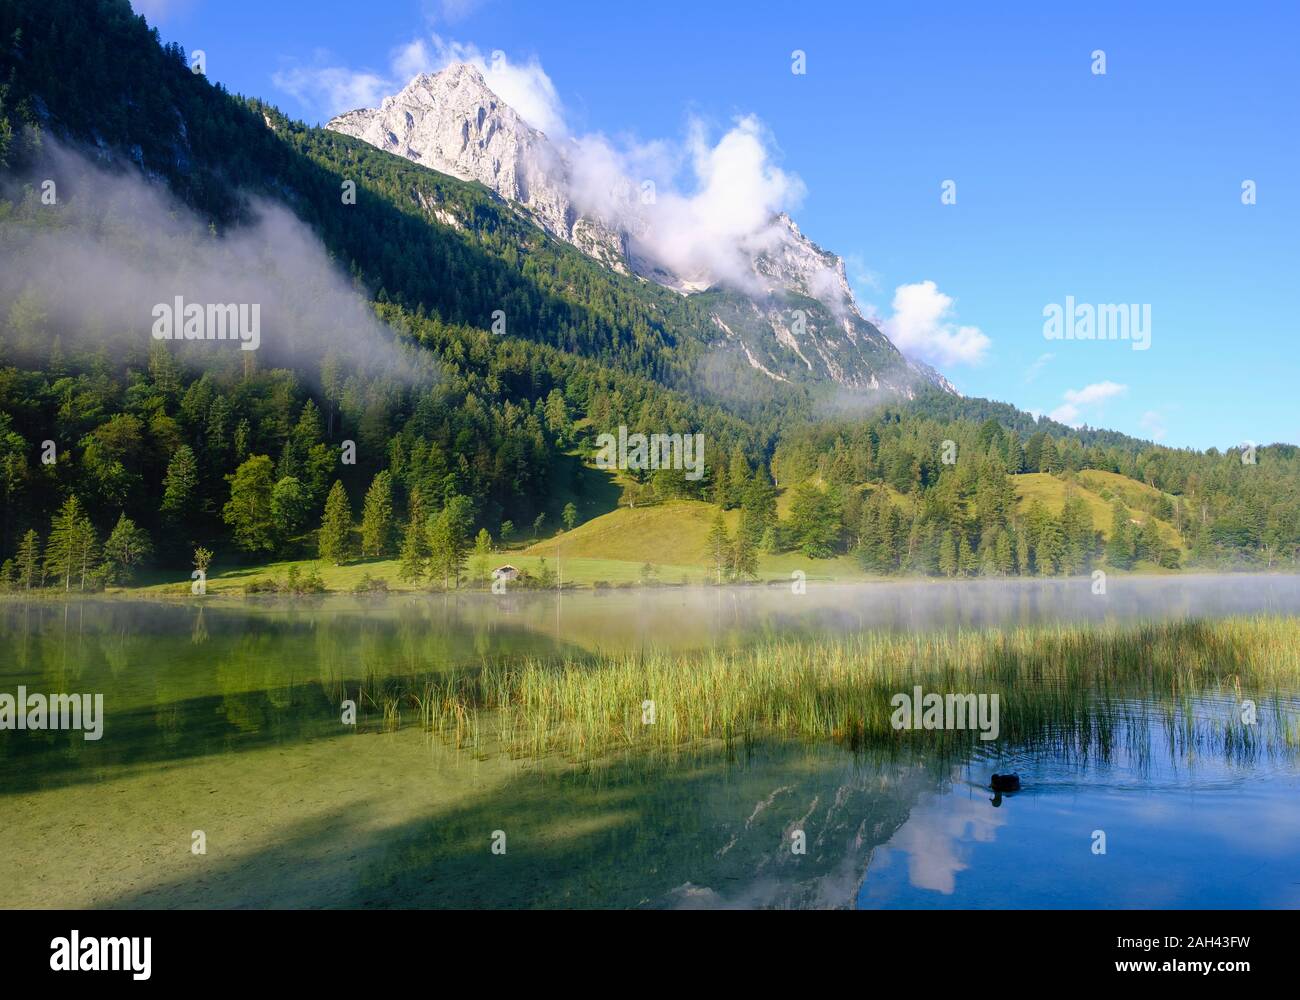 In Germania, in Baviera, Mittenwald, vista panoramica del lago Ferchensee con Wettersteinspitzen mountain in background Foto Stock